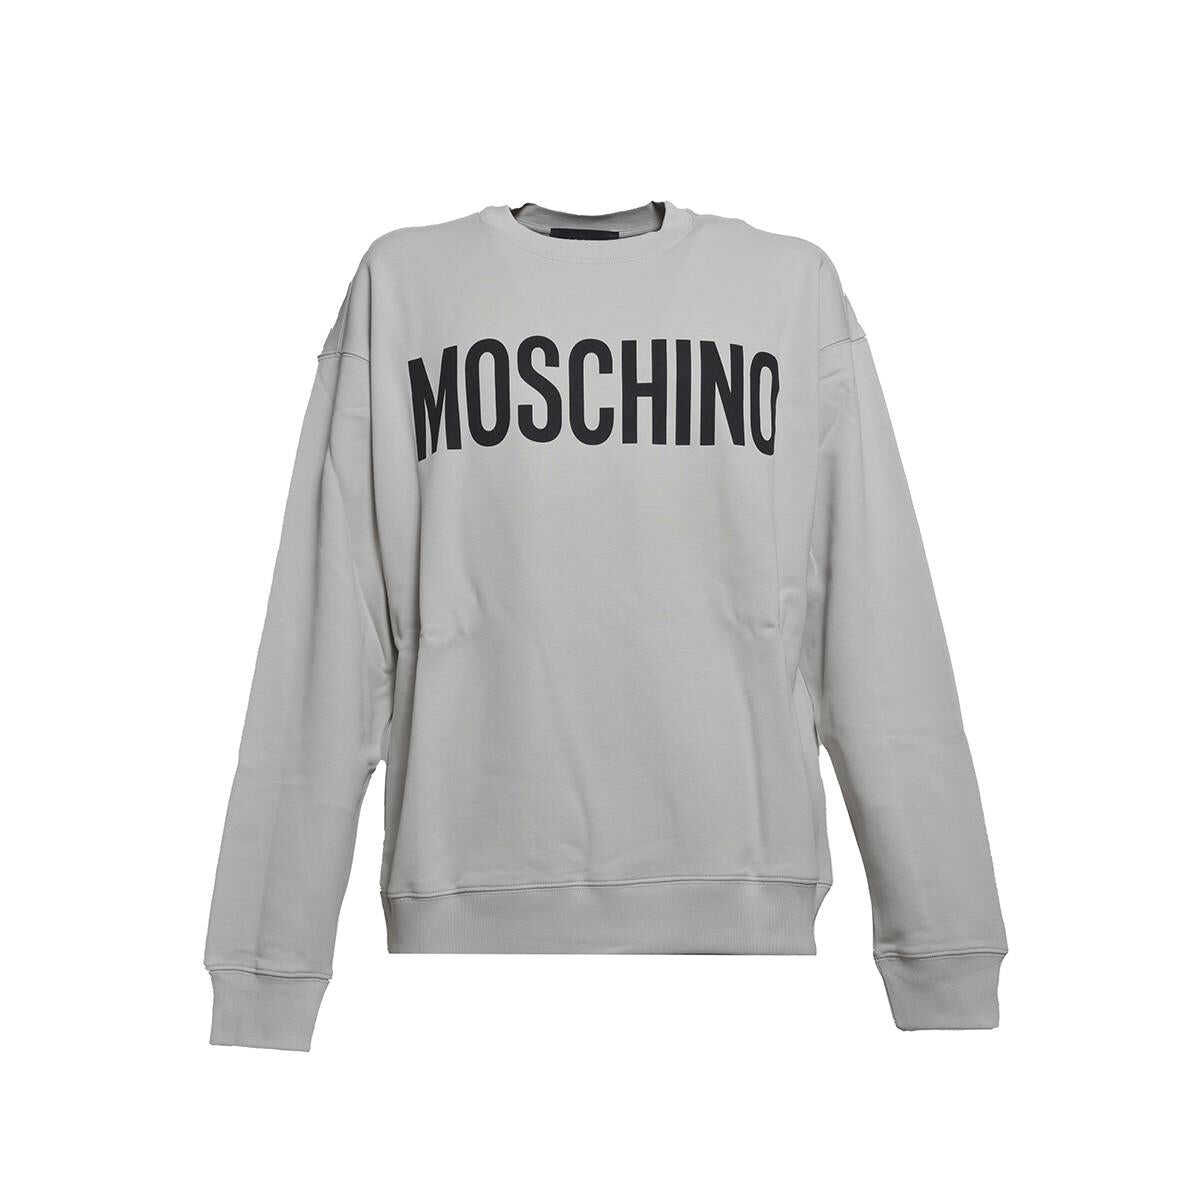 Moschino MOSCHINO Ice grey cotton crewneck sweatshirt with logo print Moschino GREY